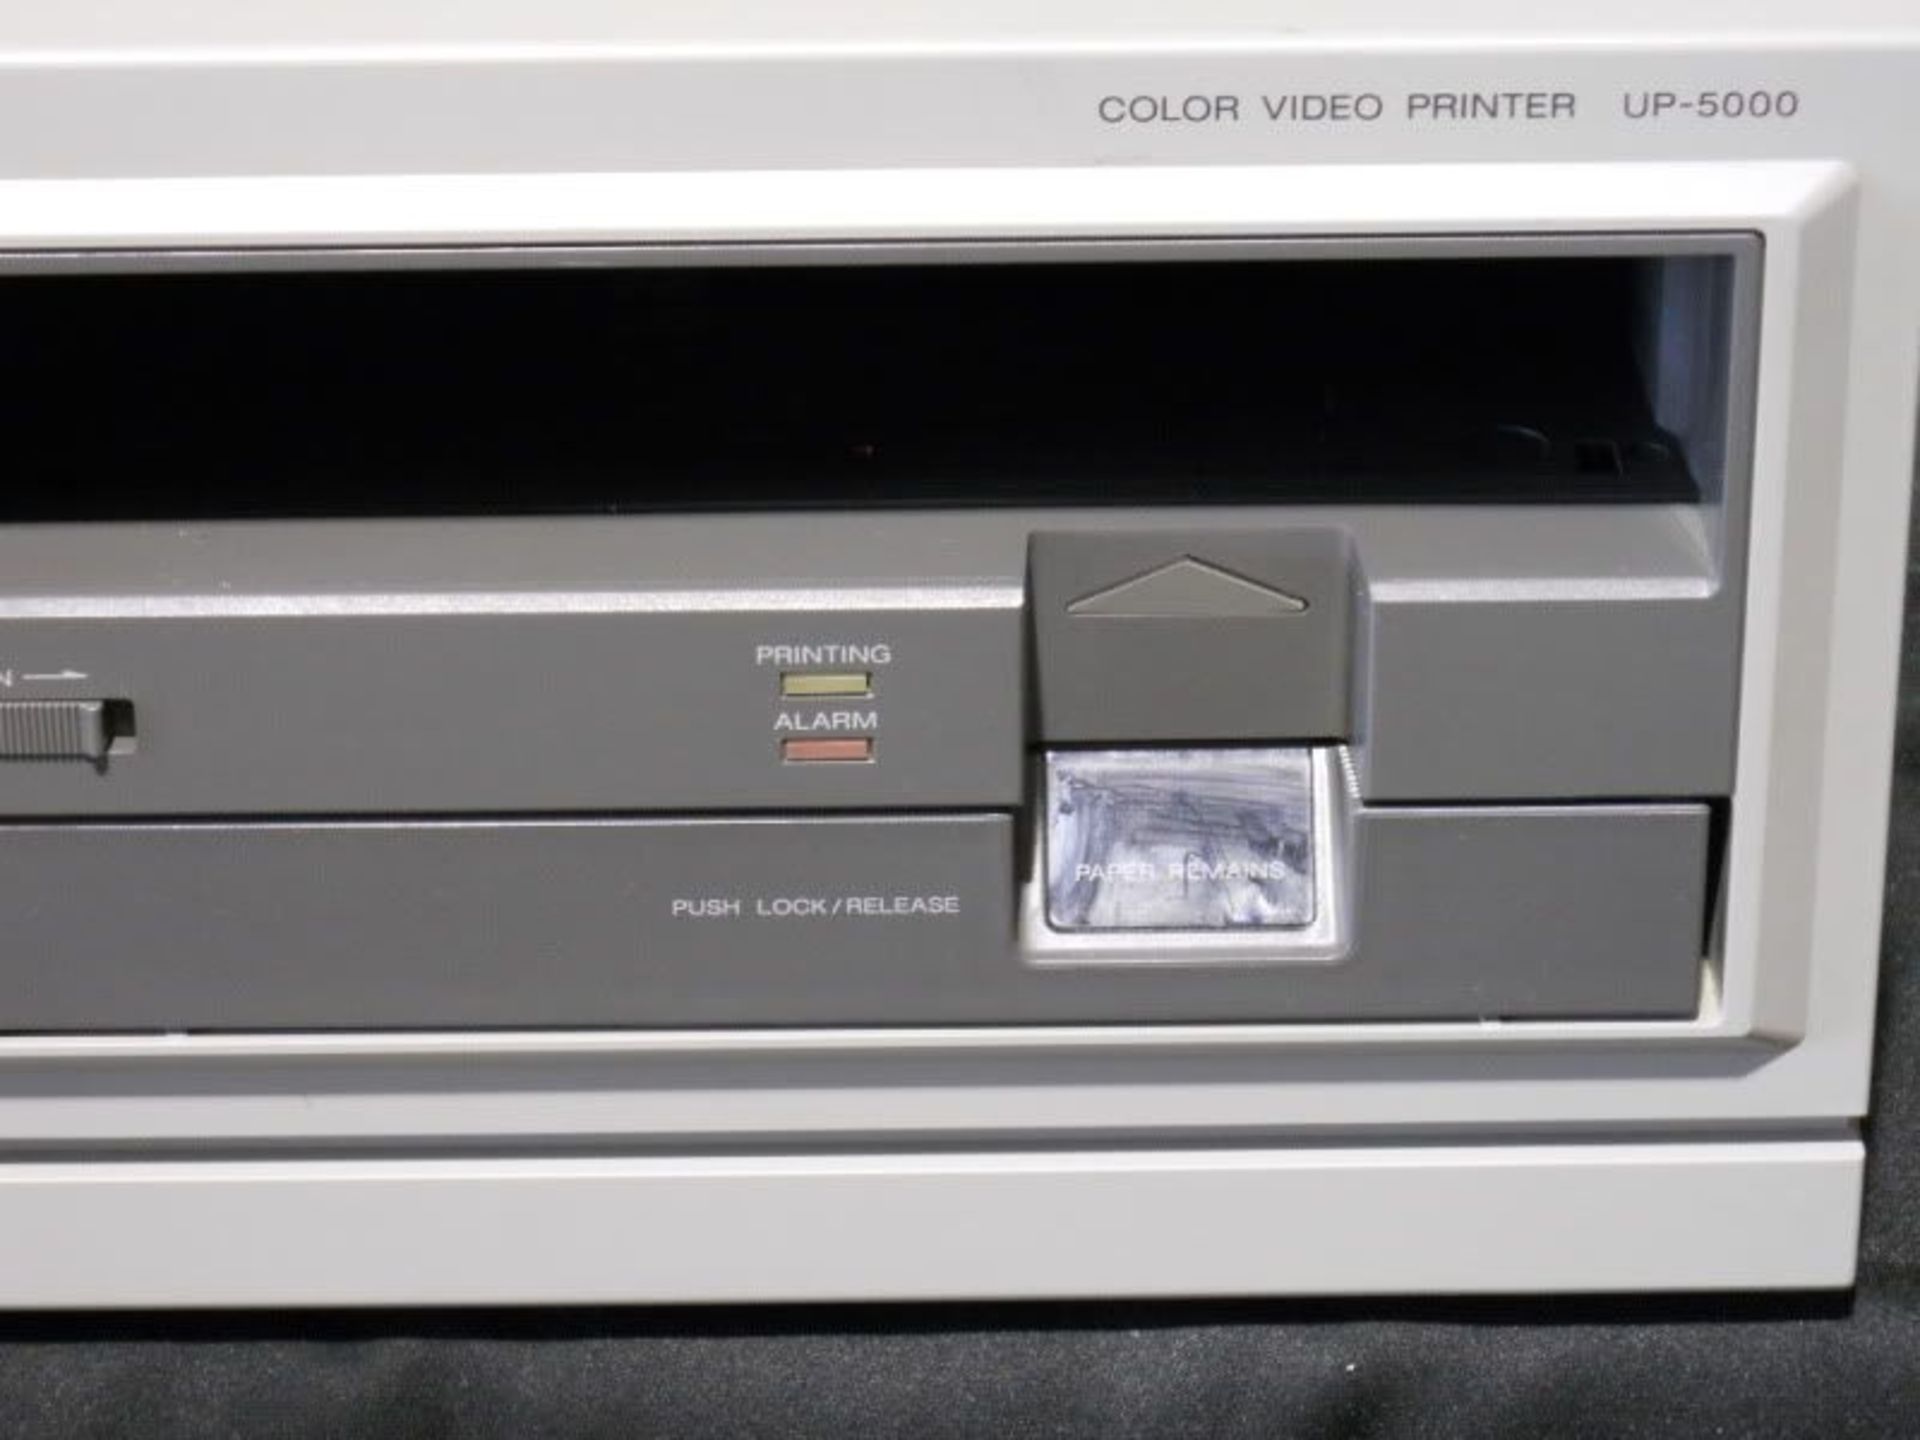 Sony Mavigraph Color Video Printer UP5000, Qty 1, 321469009610 - Image 3 of 11